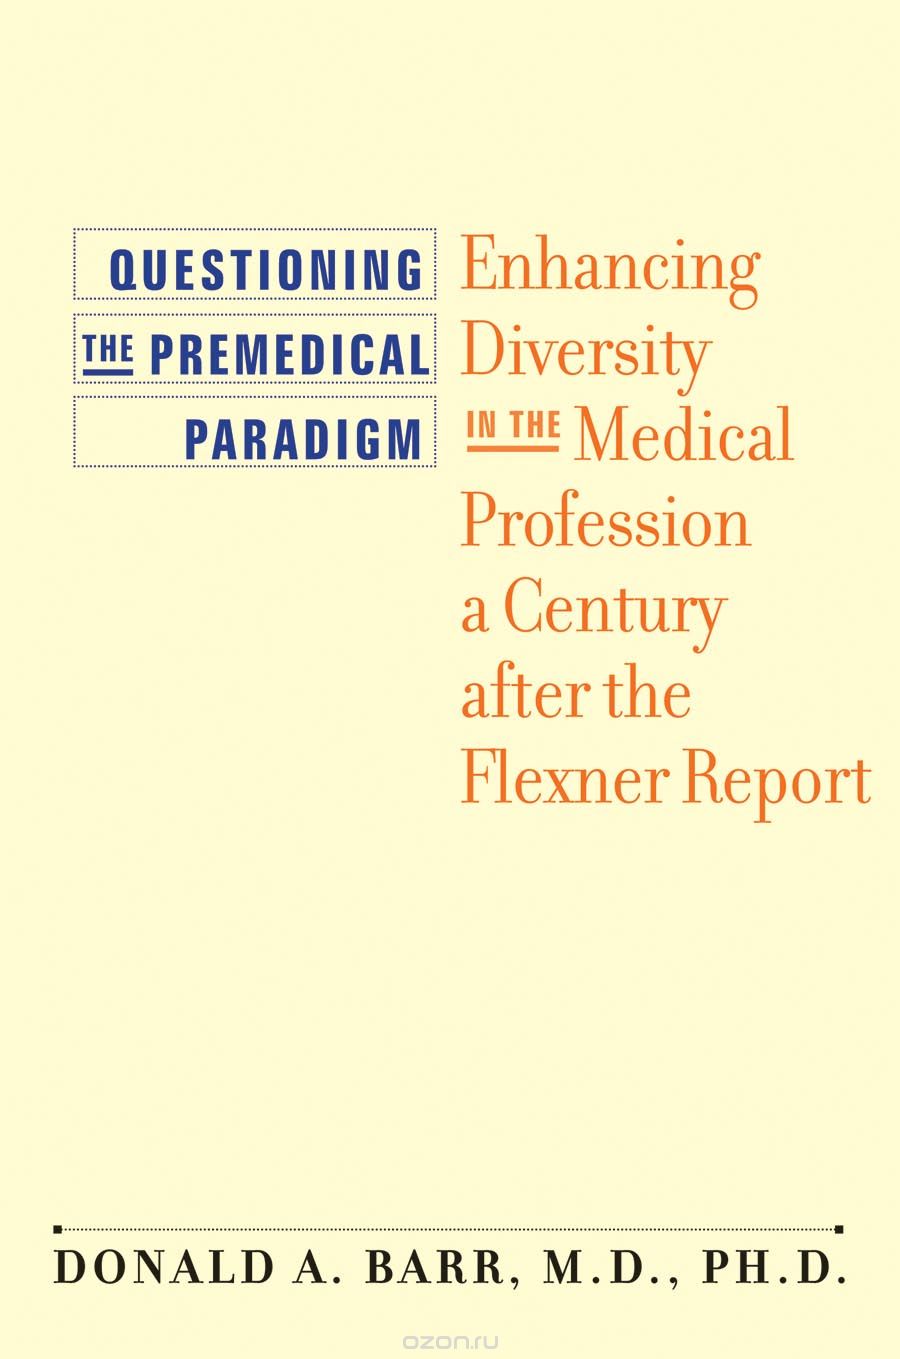 Скачать книгу "Questioning the Premedical Paradigm – Enhancing Diversity in the Medical Profession a Century after the Flexner Report"